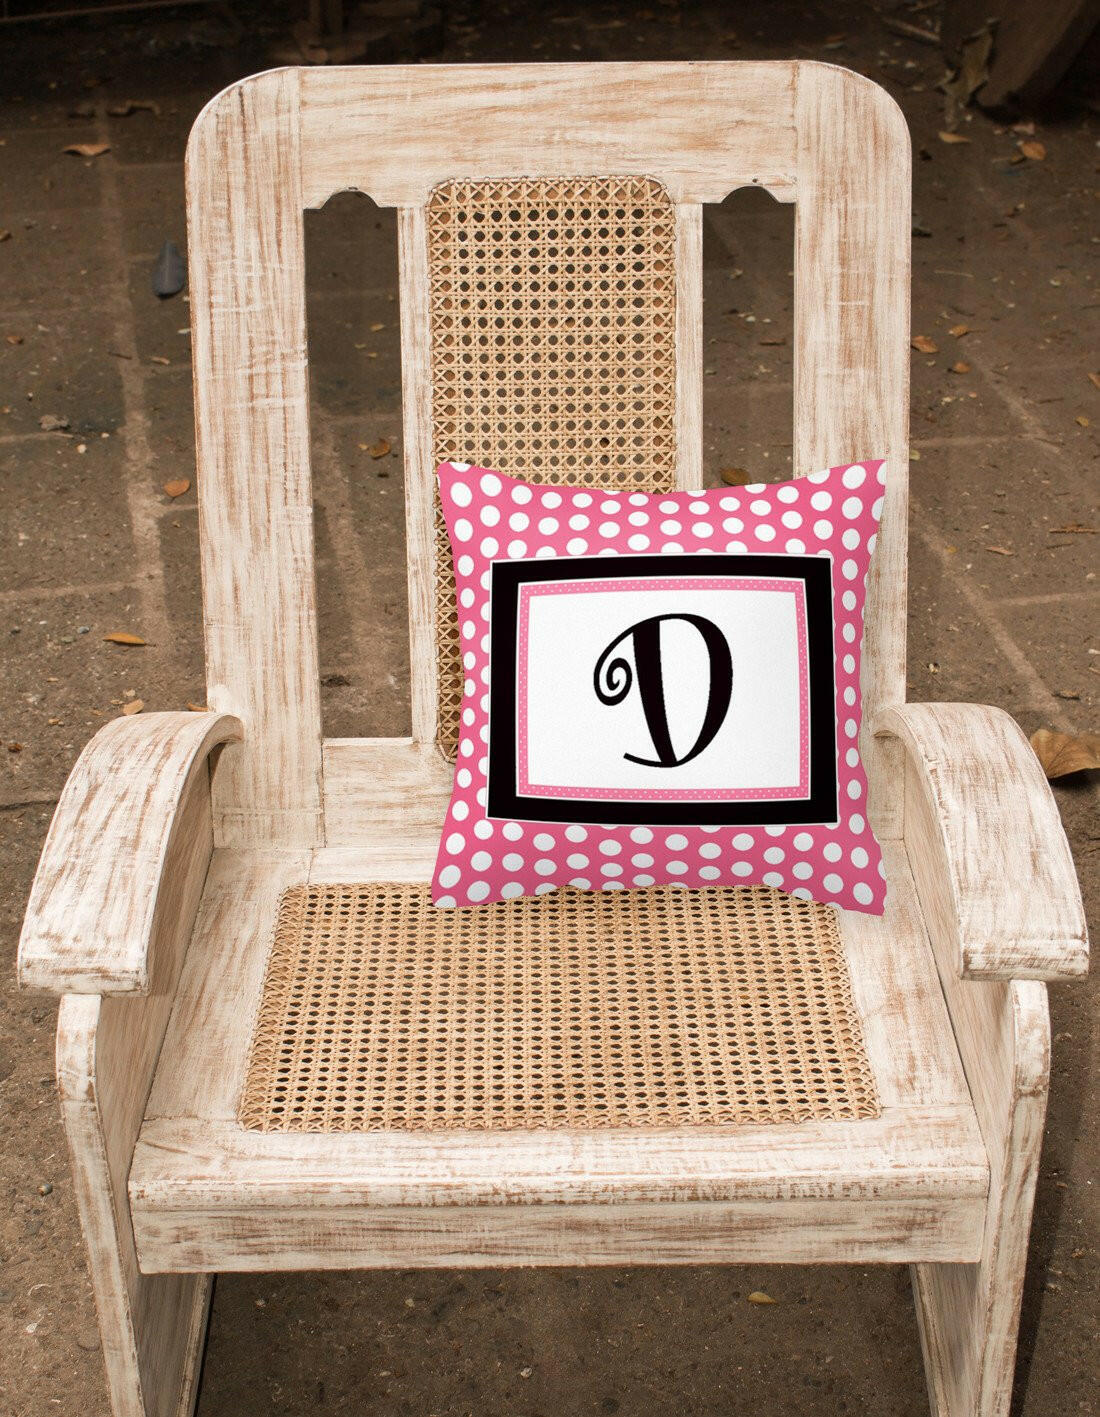 Monogram Initial D Pink Black Polka Dots Decorative Canvas Fabric Pillow CJ1001 - the-store.com